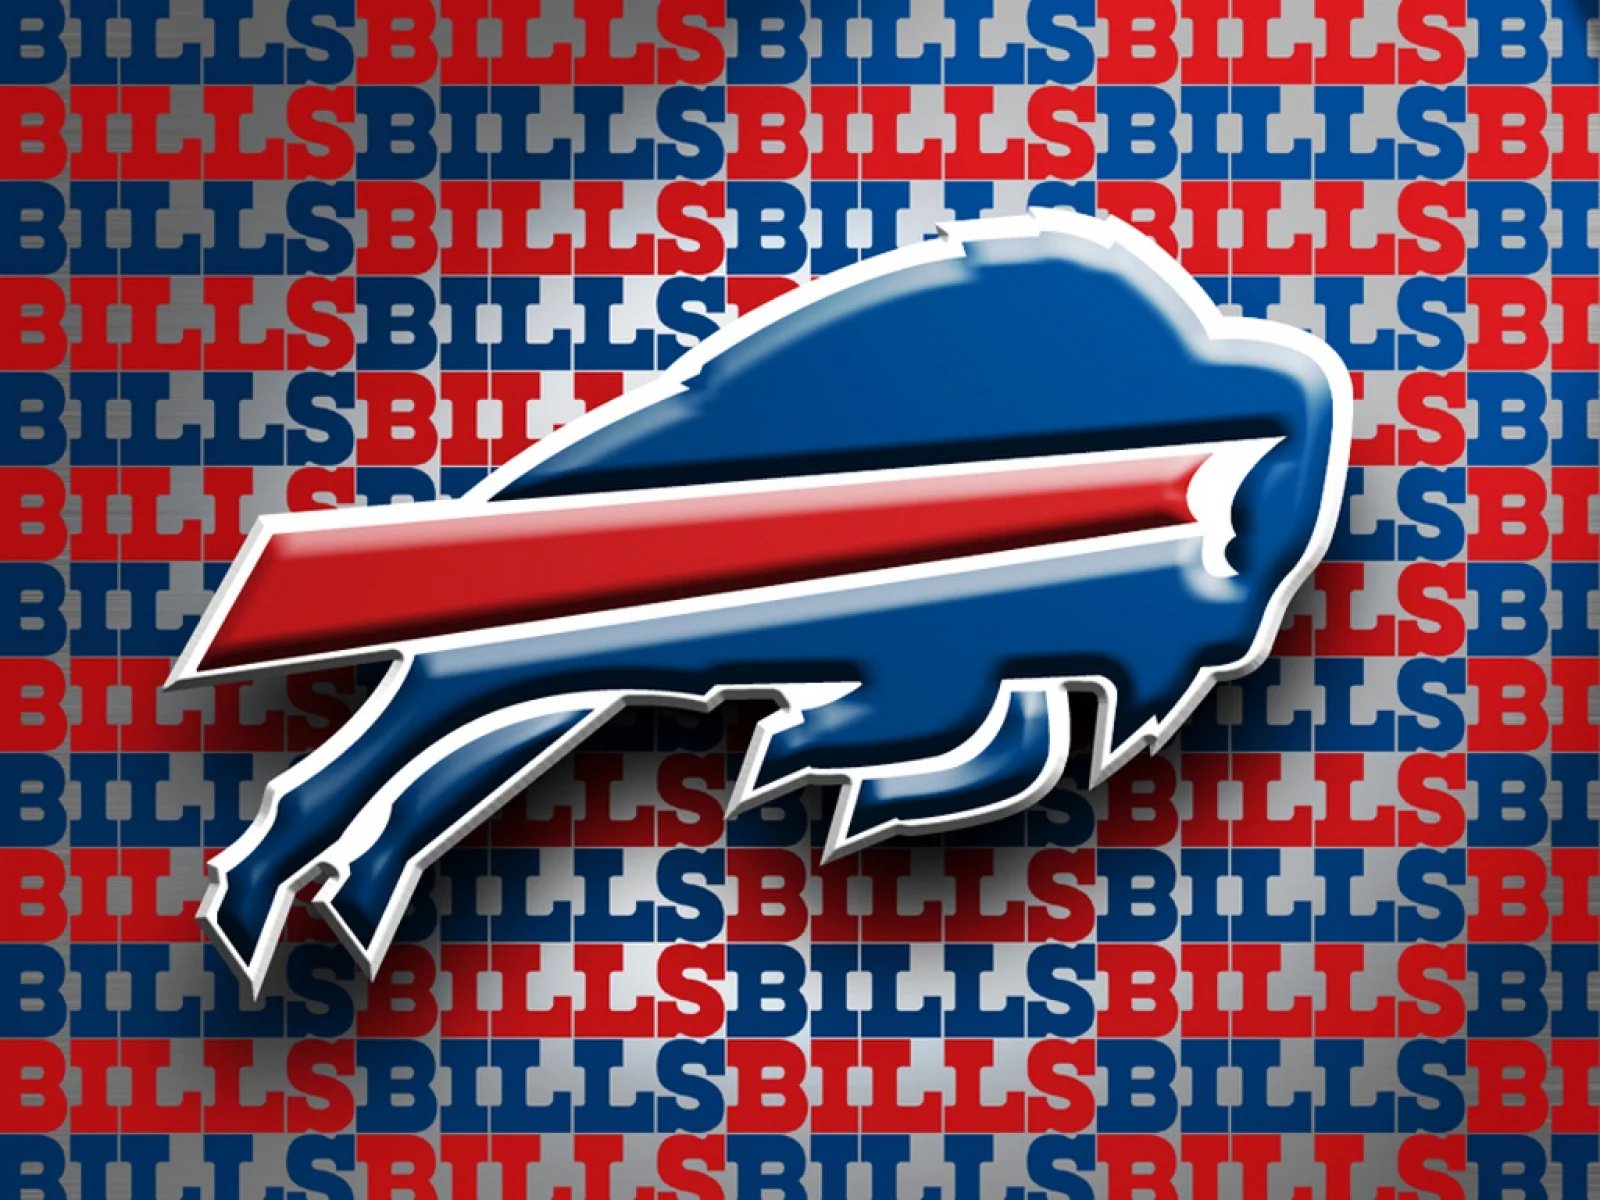 Background Buffalo Bills Wallpaper